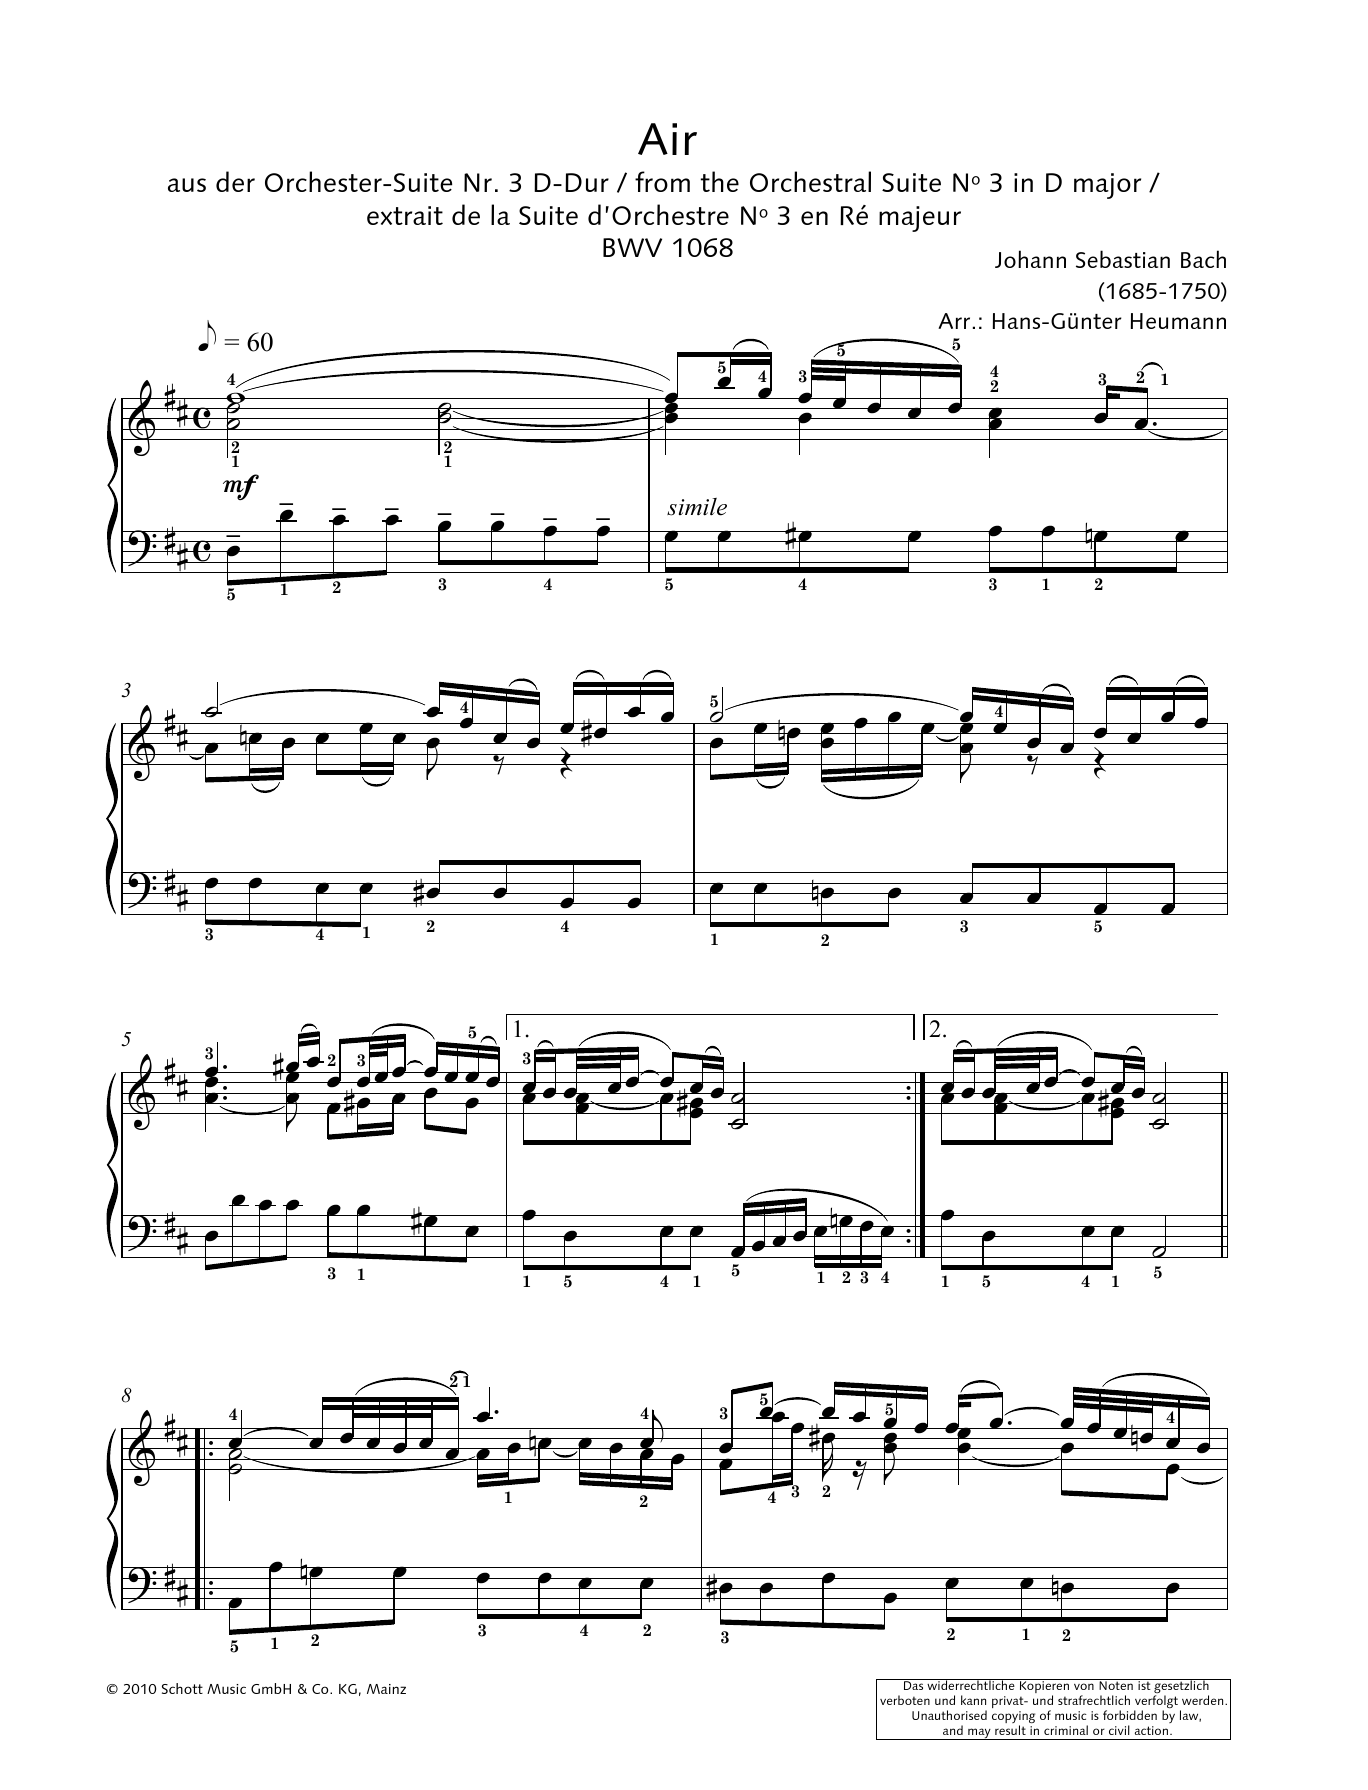 Johann Sebastian Bach Air Sheet Music Notes & Chords for Piano Solo - Download or Print PDF